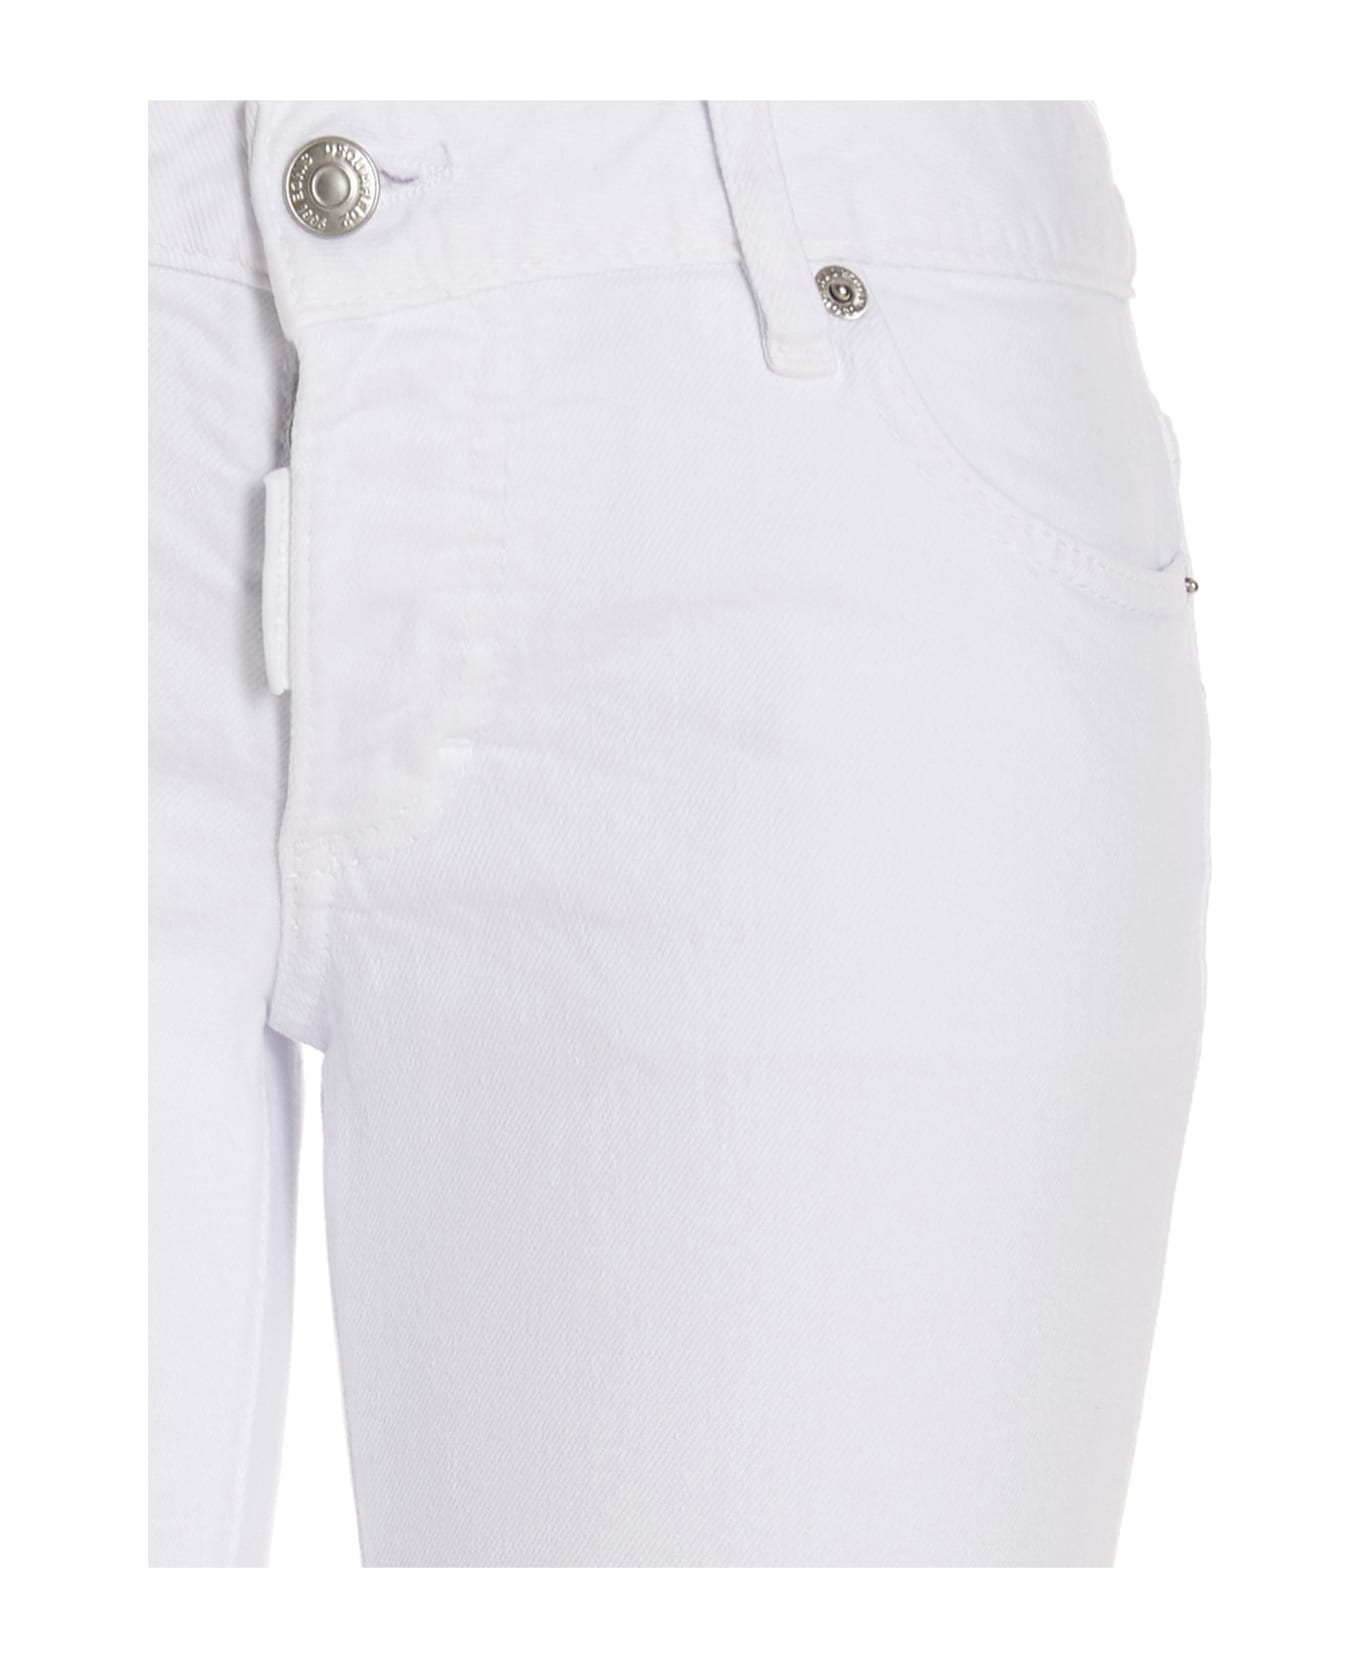 Dsquared2 Jennifer Crop Jeans - WHITE